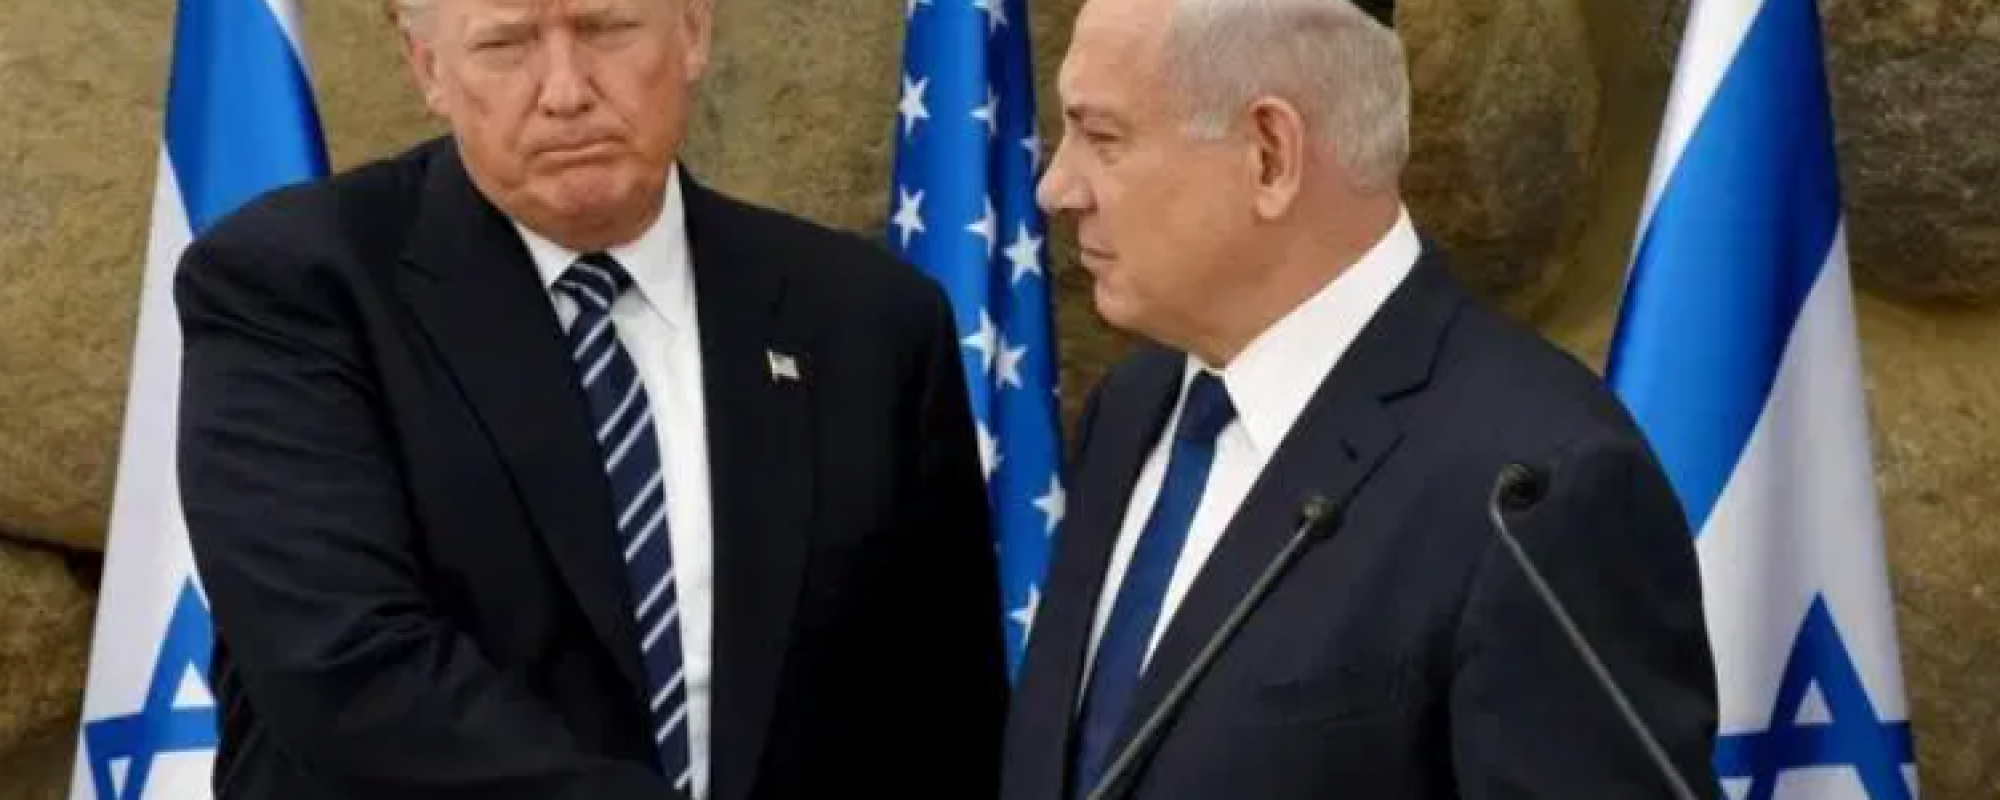 Trump y Netanyahu